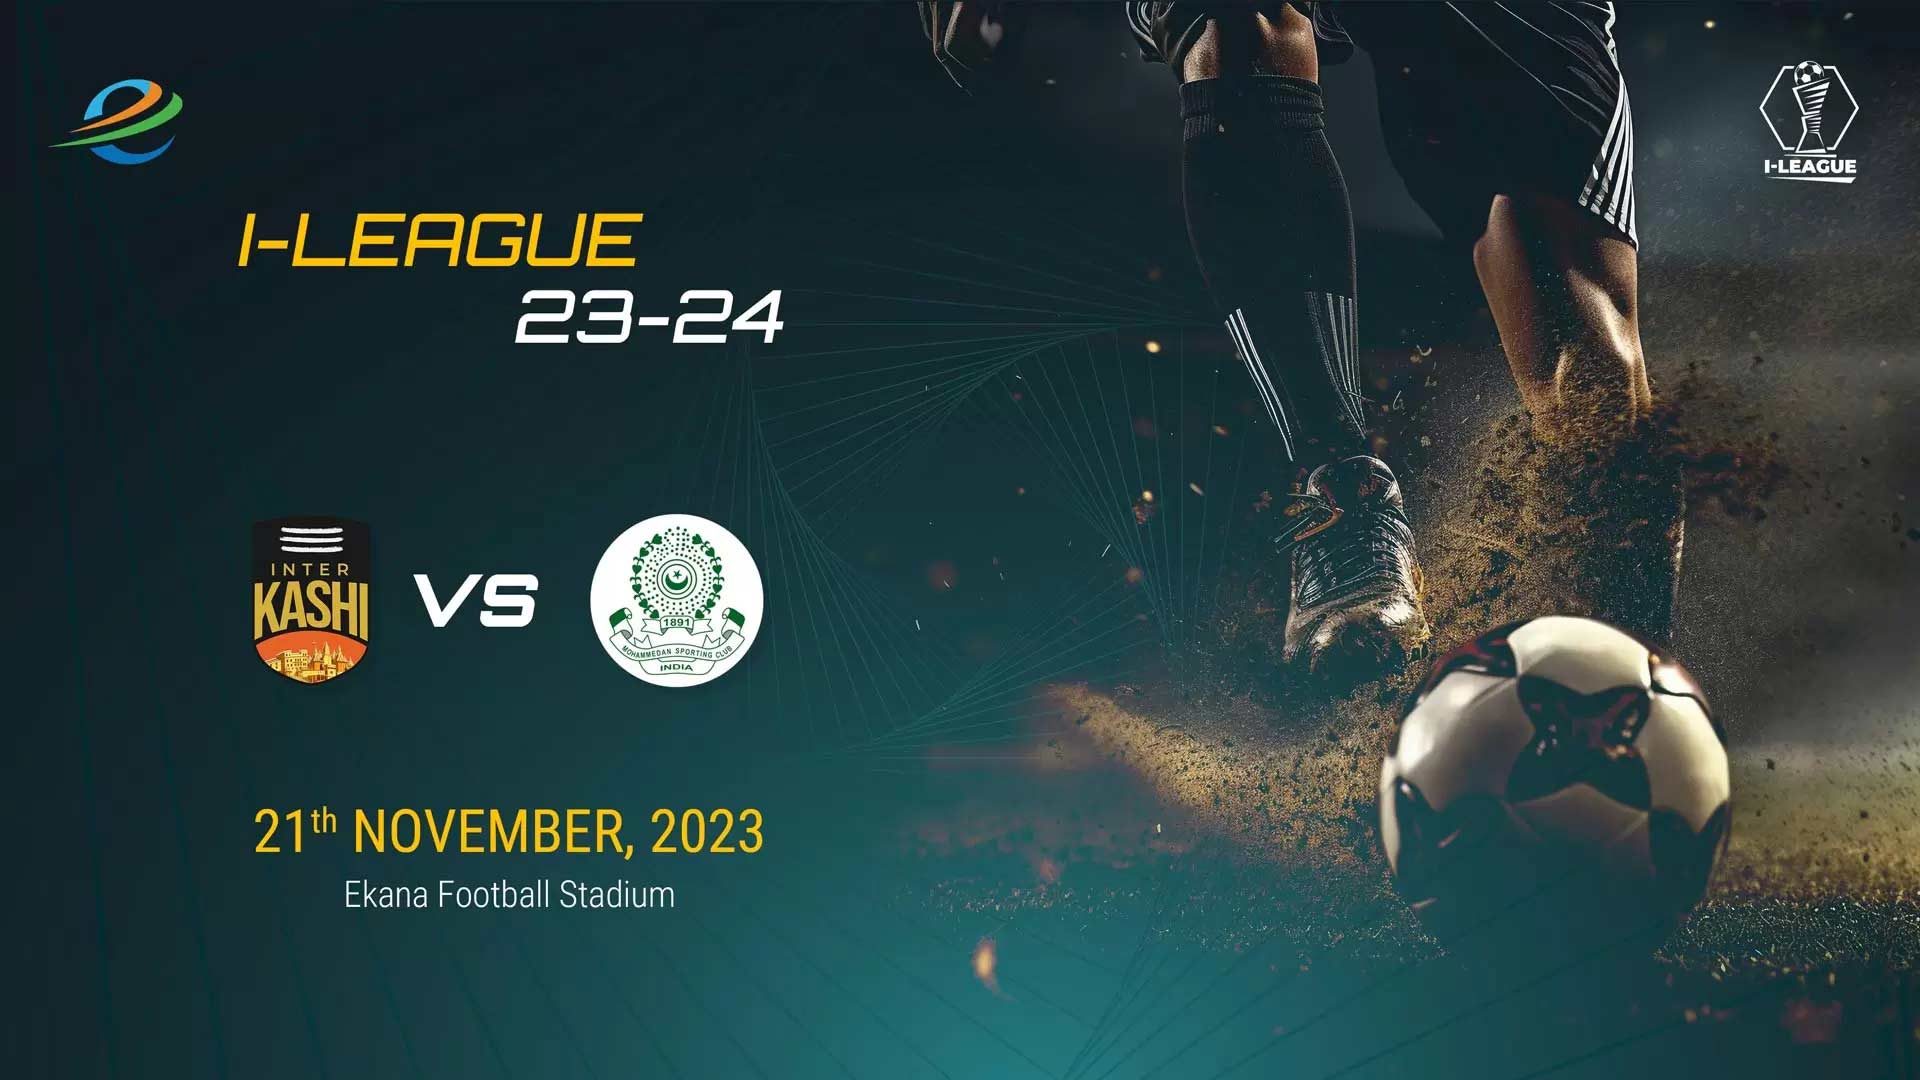 I-League 23-24 : Inter Kashi vs Mohammedan SC